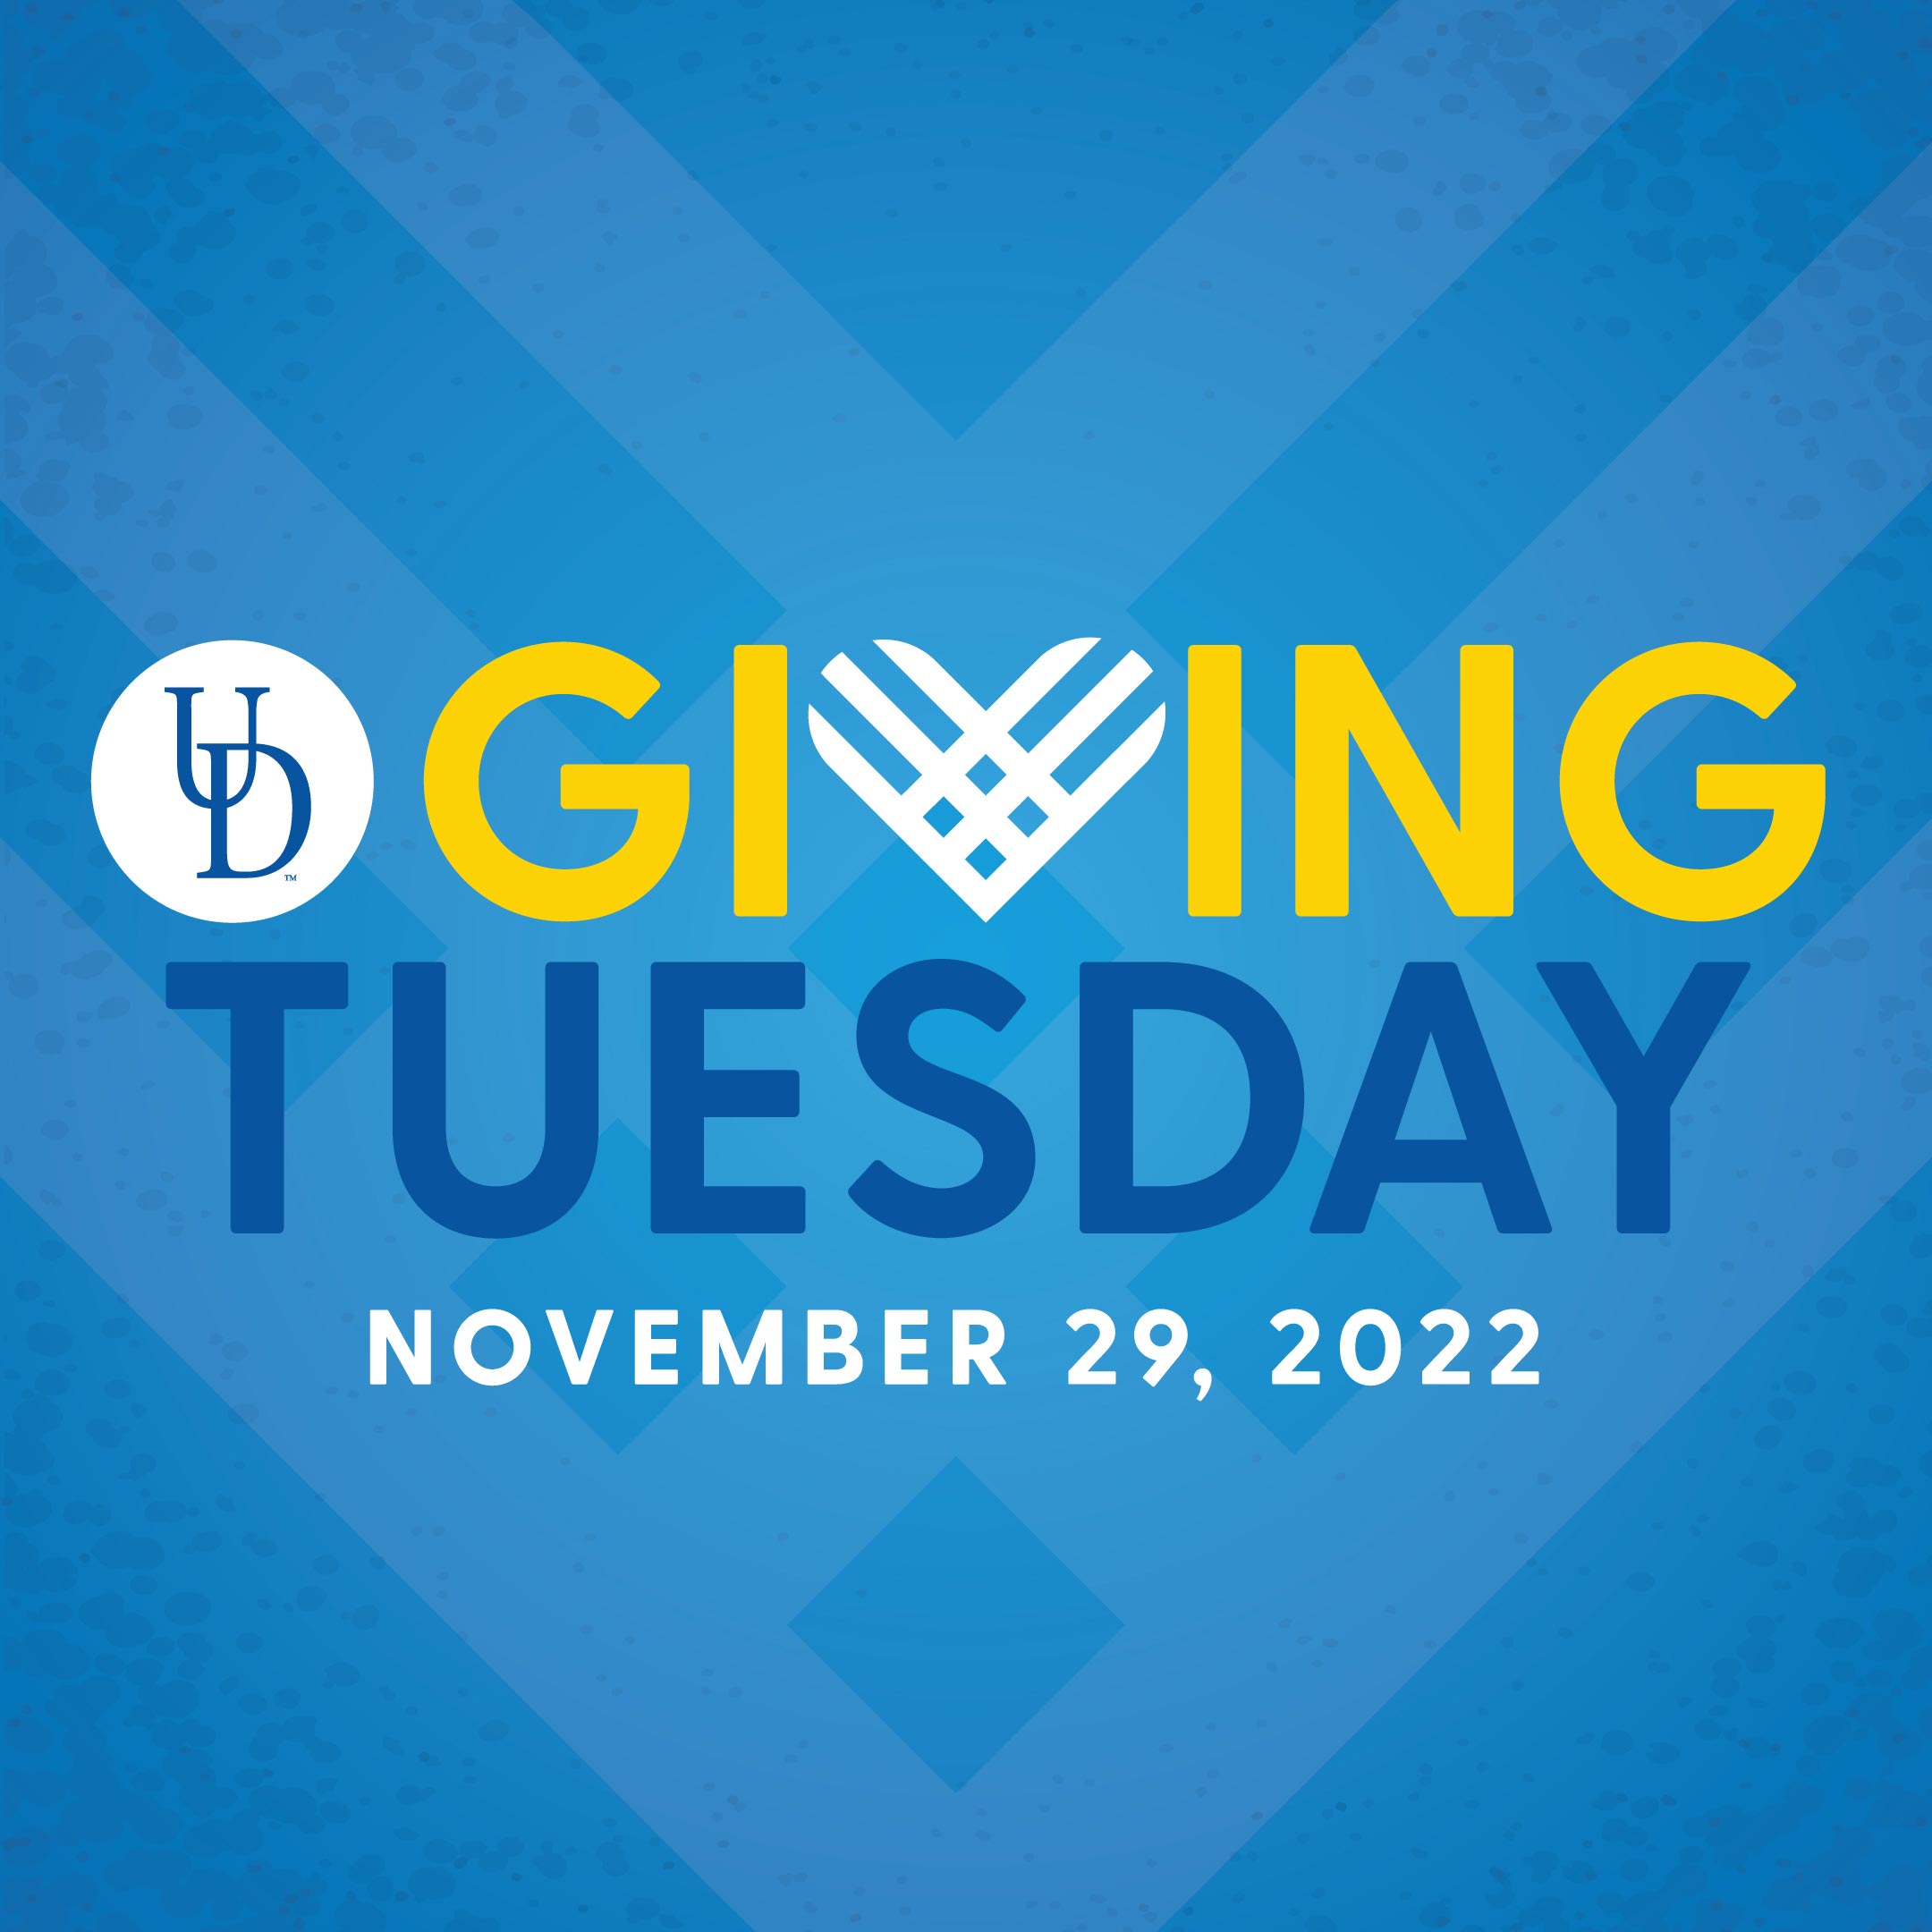 Giving Tuesday, November 29, 2022